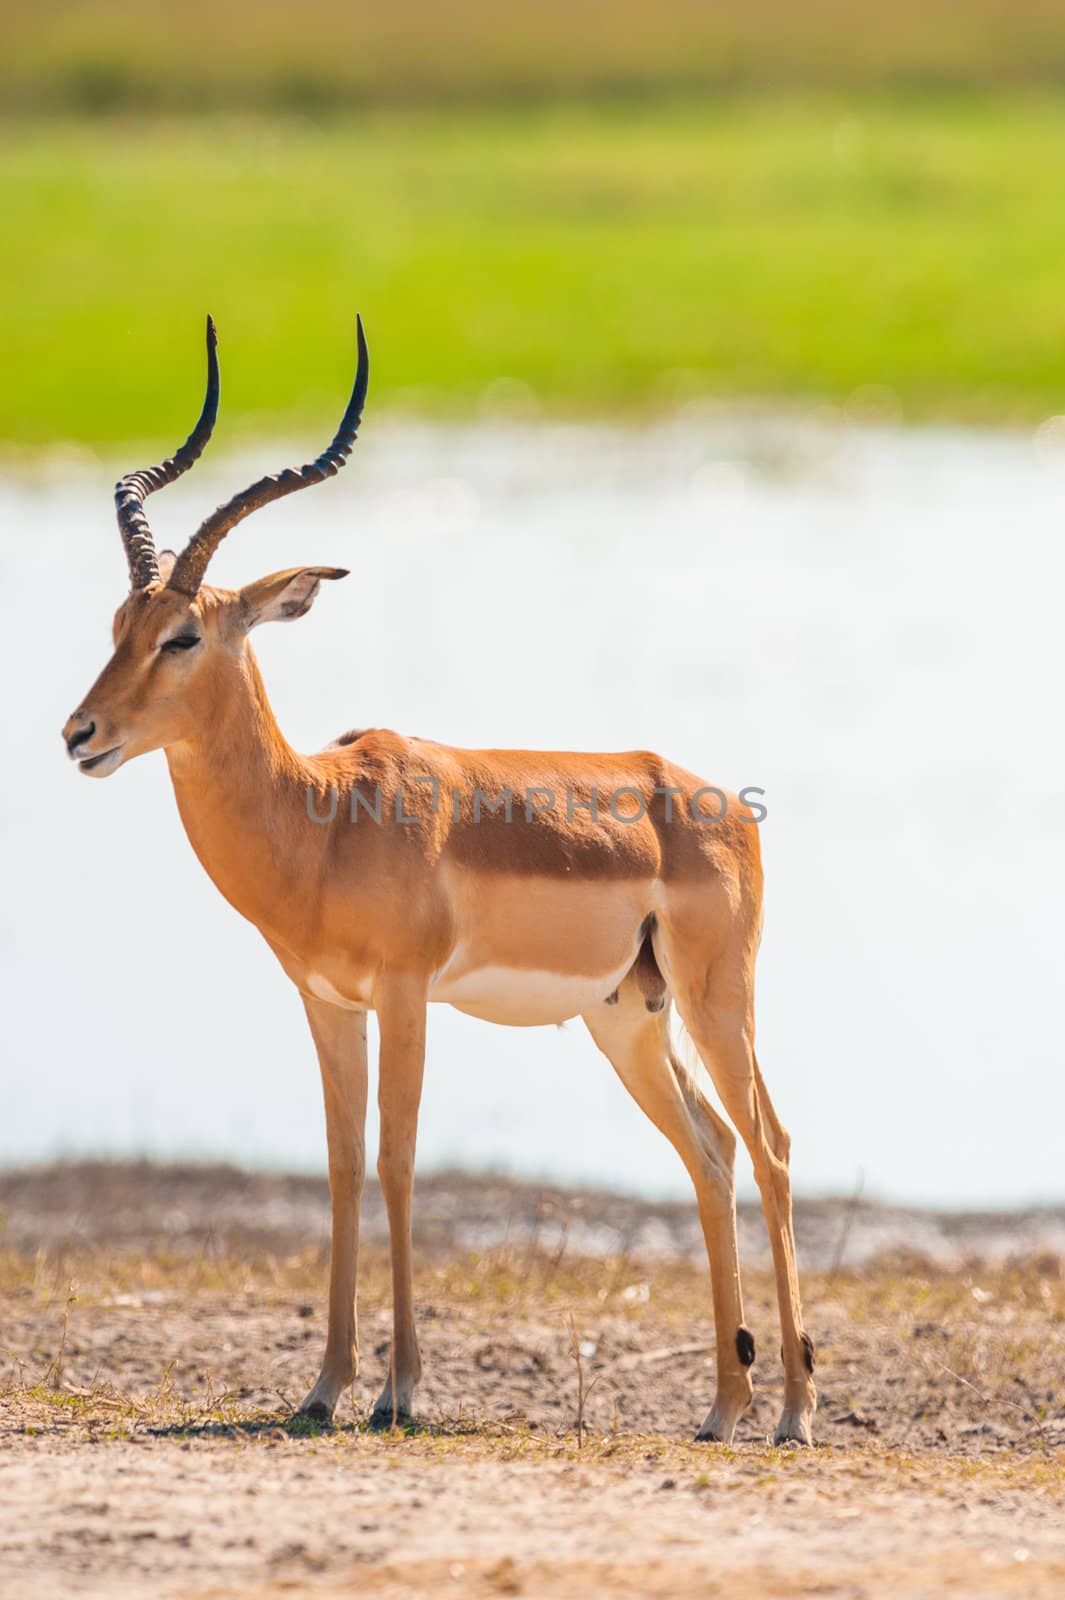 Impala (Aepyceros melampus) in
Chobe National Park, Botswana